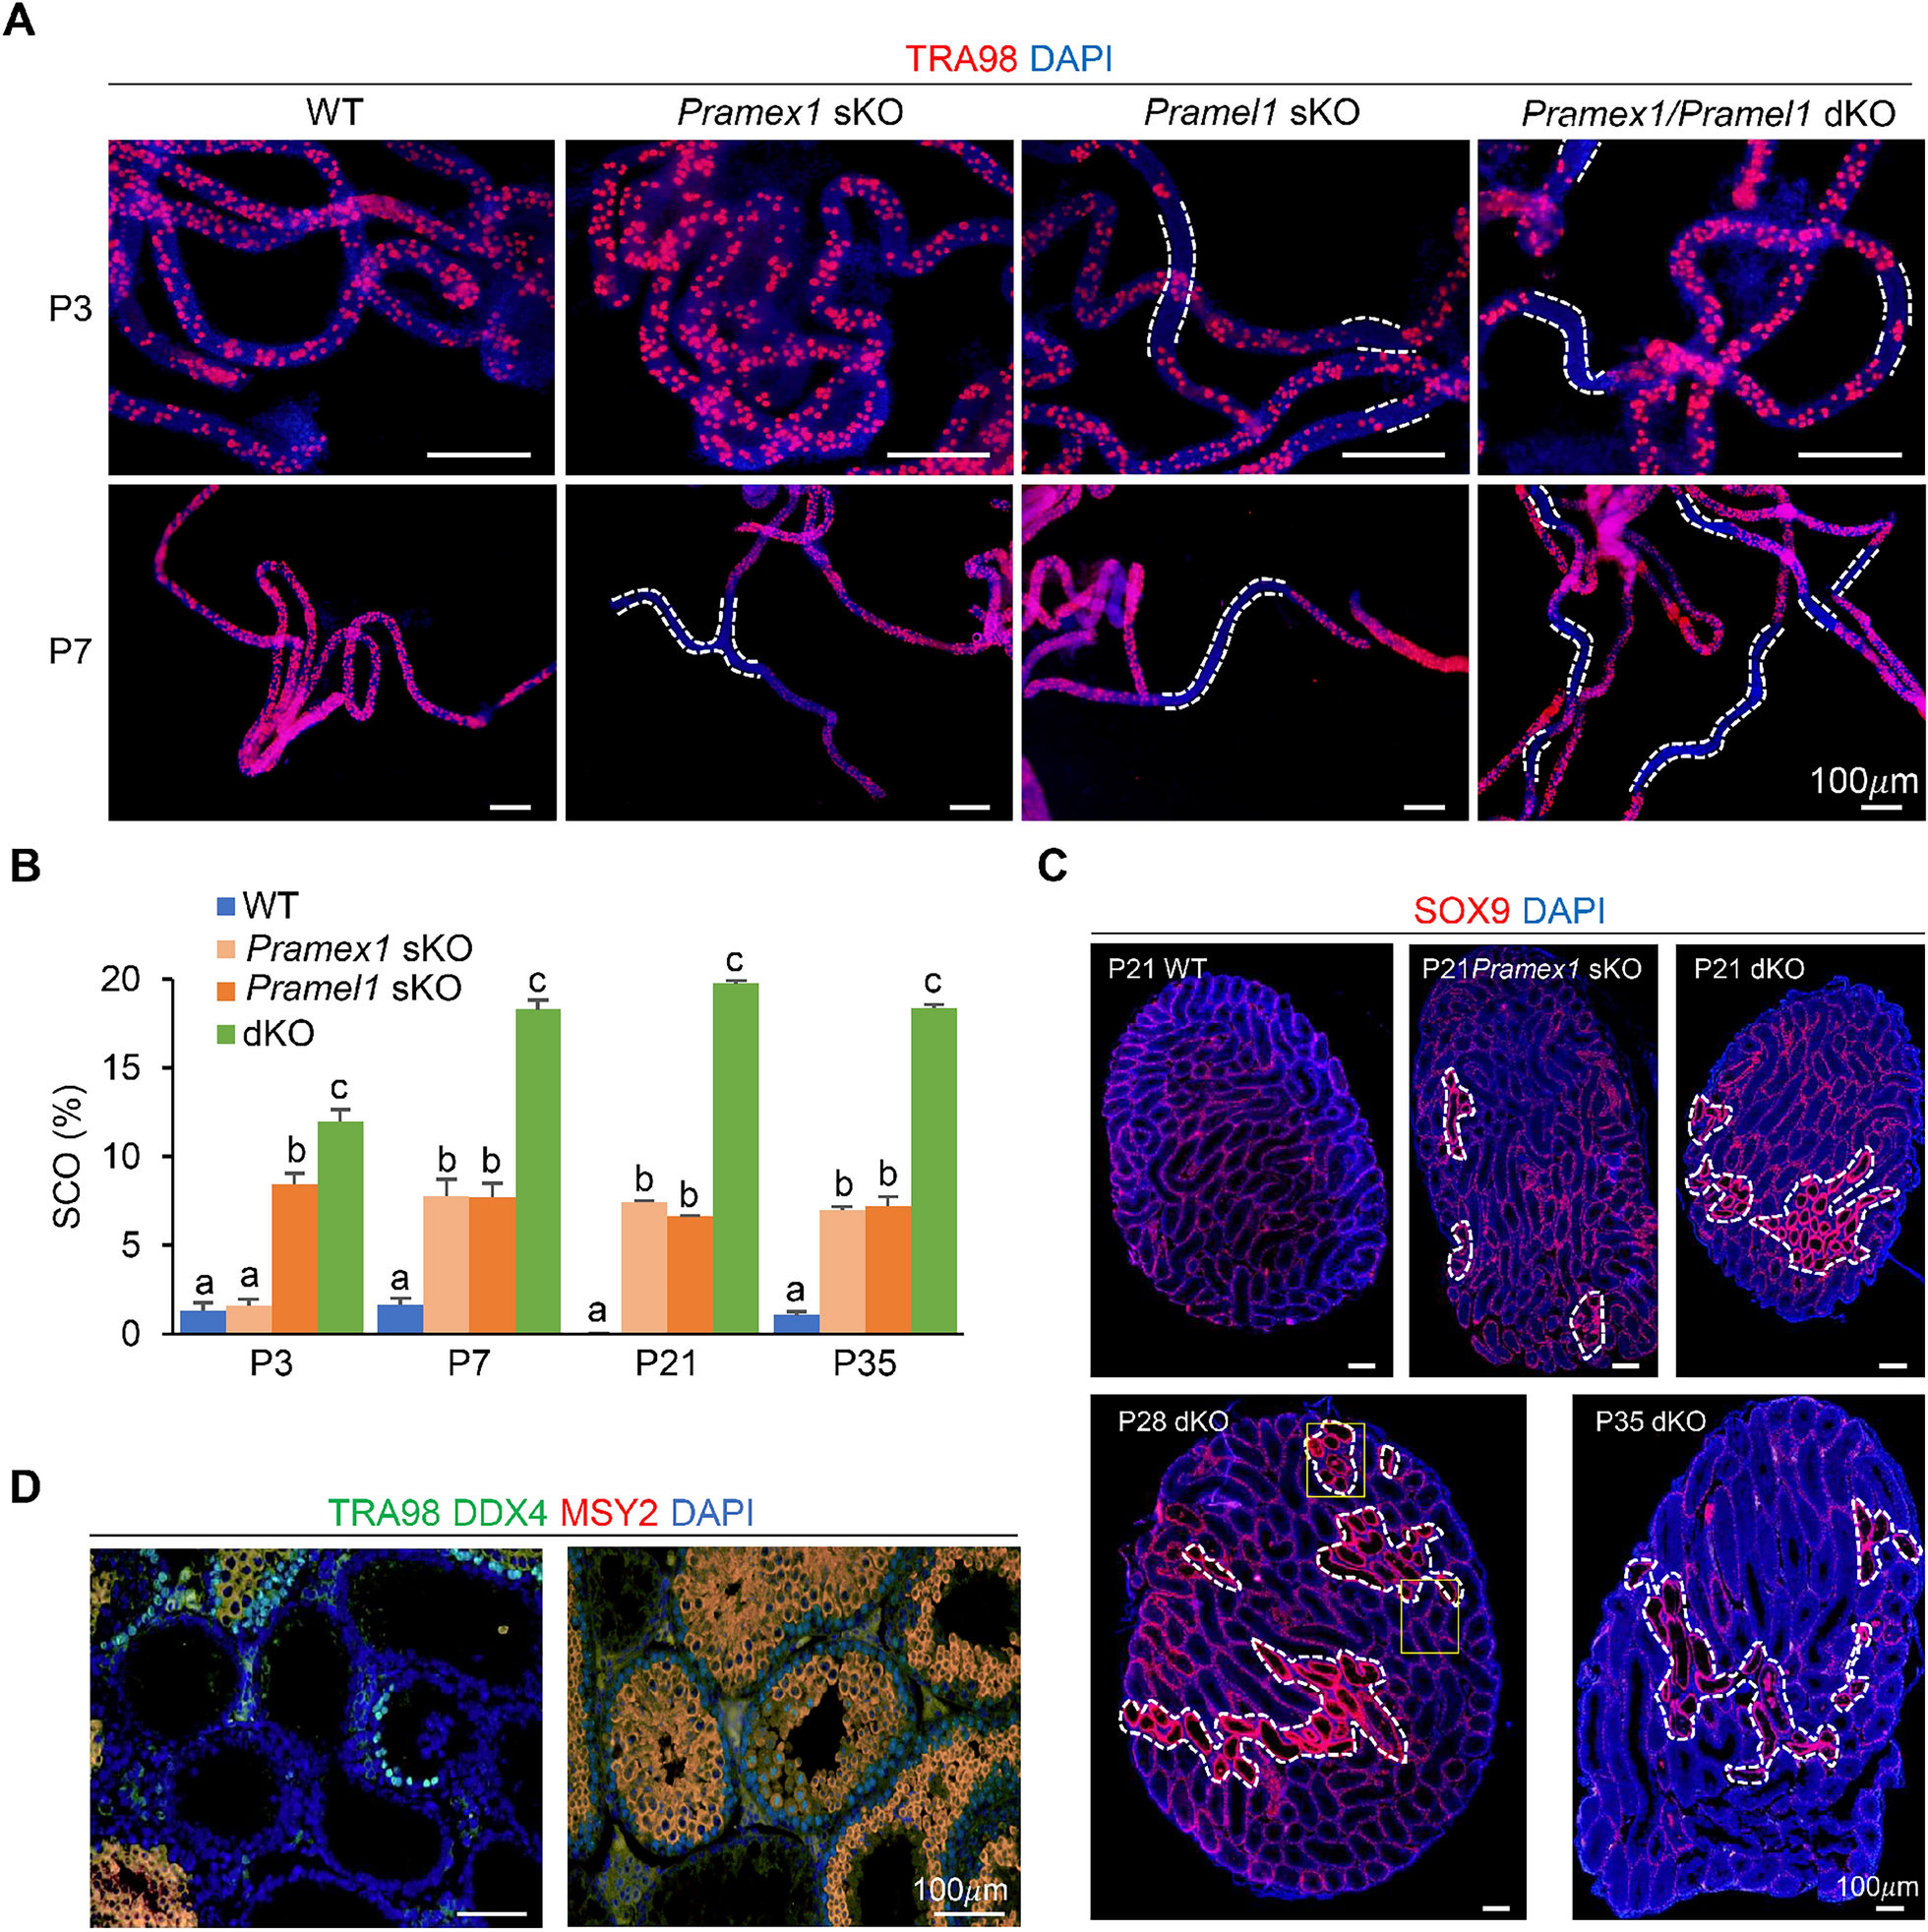 Synergistic enhancement of the mouse Pramex1 and Pramel1 in repressing retinoic acid (RA) signaling during gametogenesis